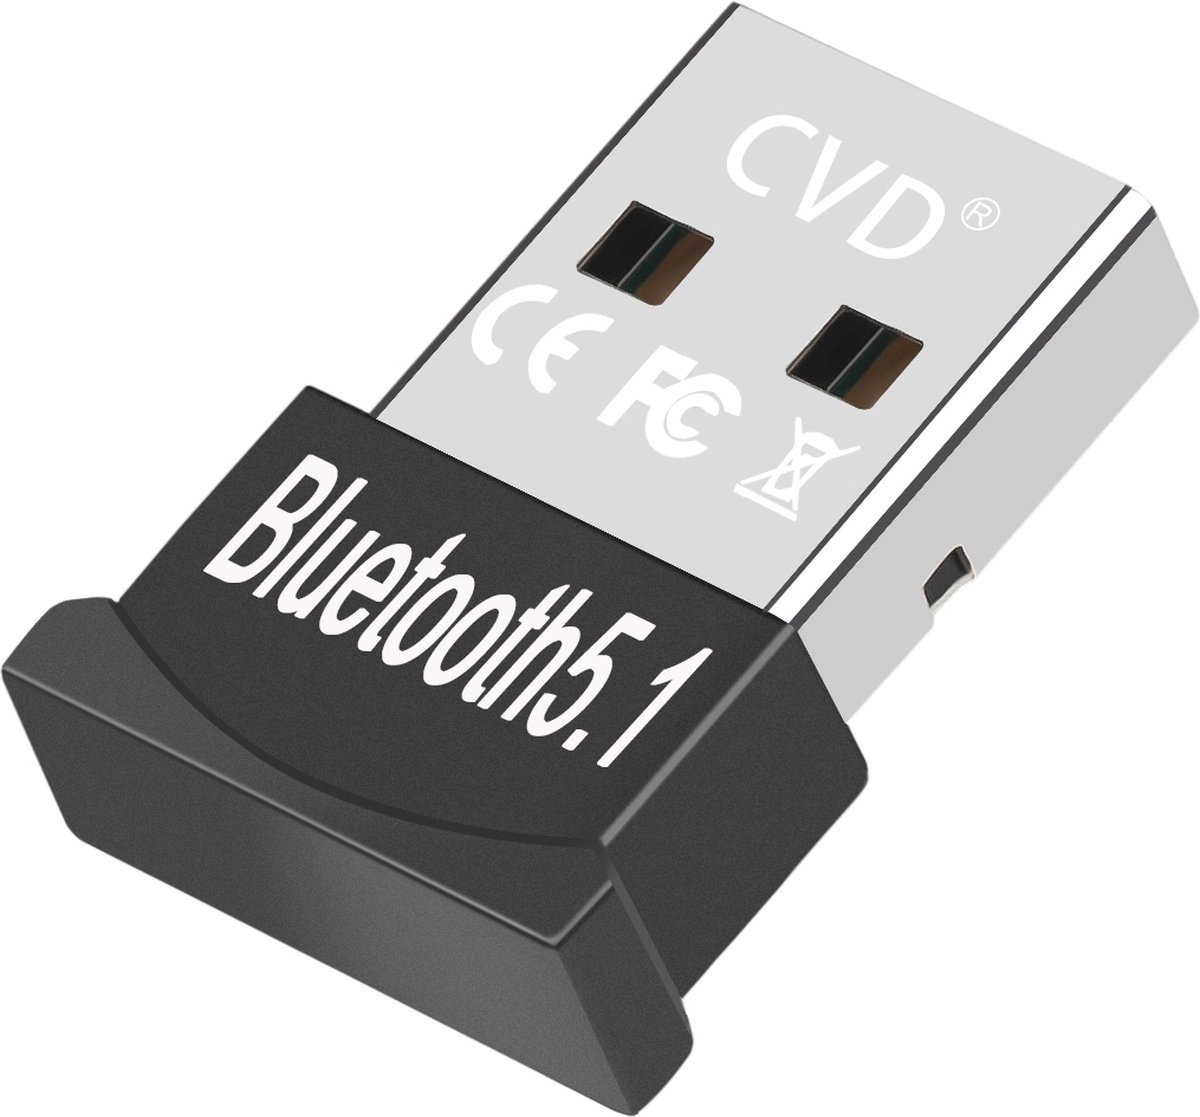 CVD® High Quality Bluetooth 5.1 adapter - USB-adapter - Windows 11/10 Plug and Play - Windows 7/8 gratis driver downloaden - CVD